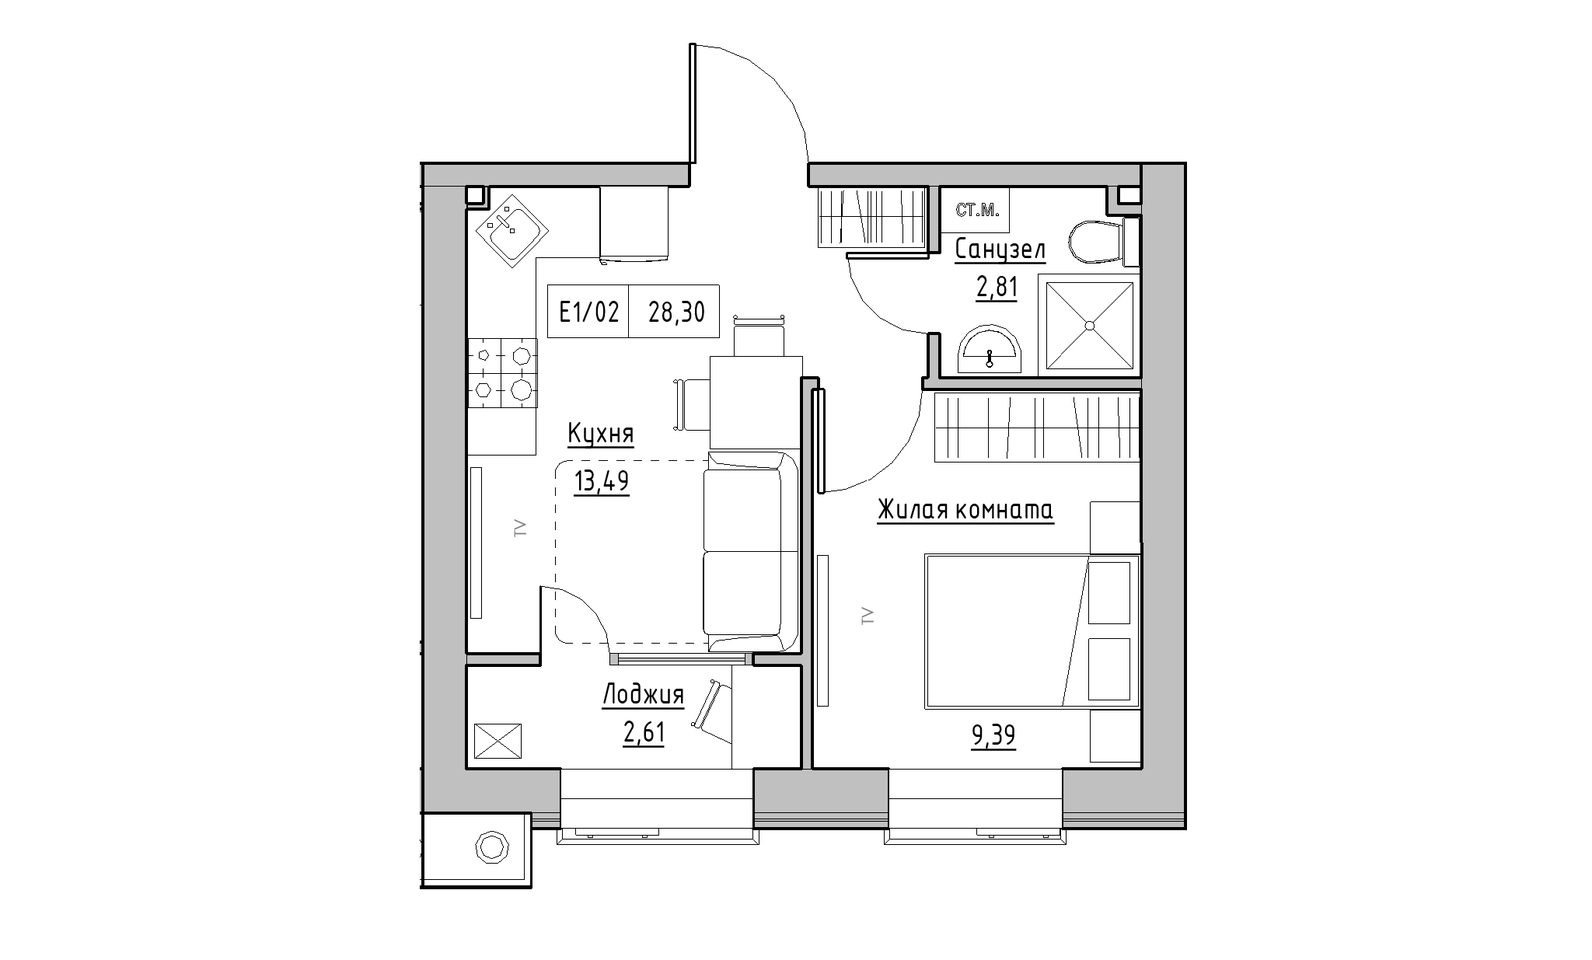 Planning 1-rm flats area 28.3m2, KS-014-04/0001.